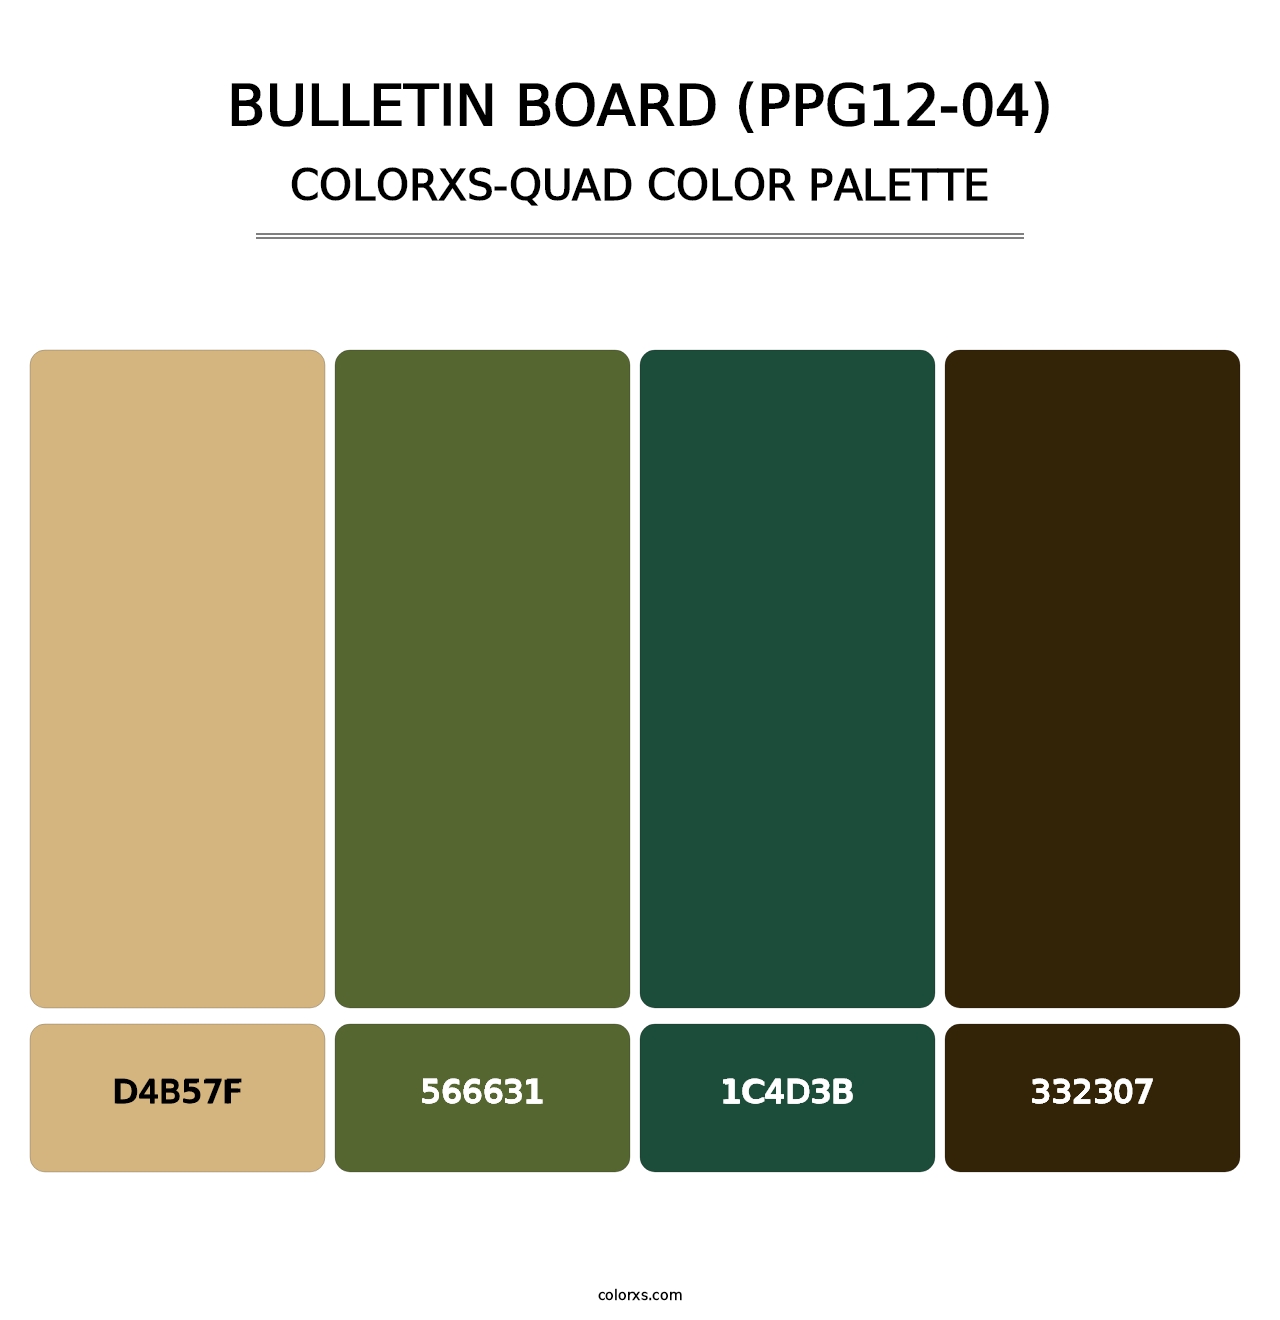 Bulletin Board (PPG12-04) - Colorxs Quad Palette